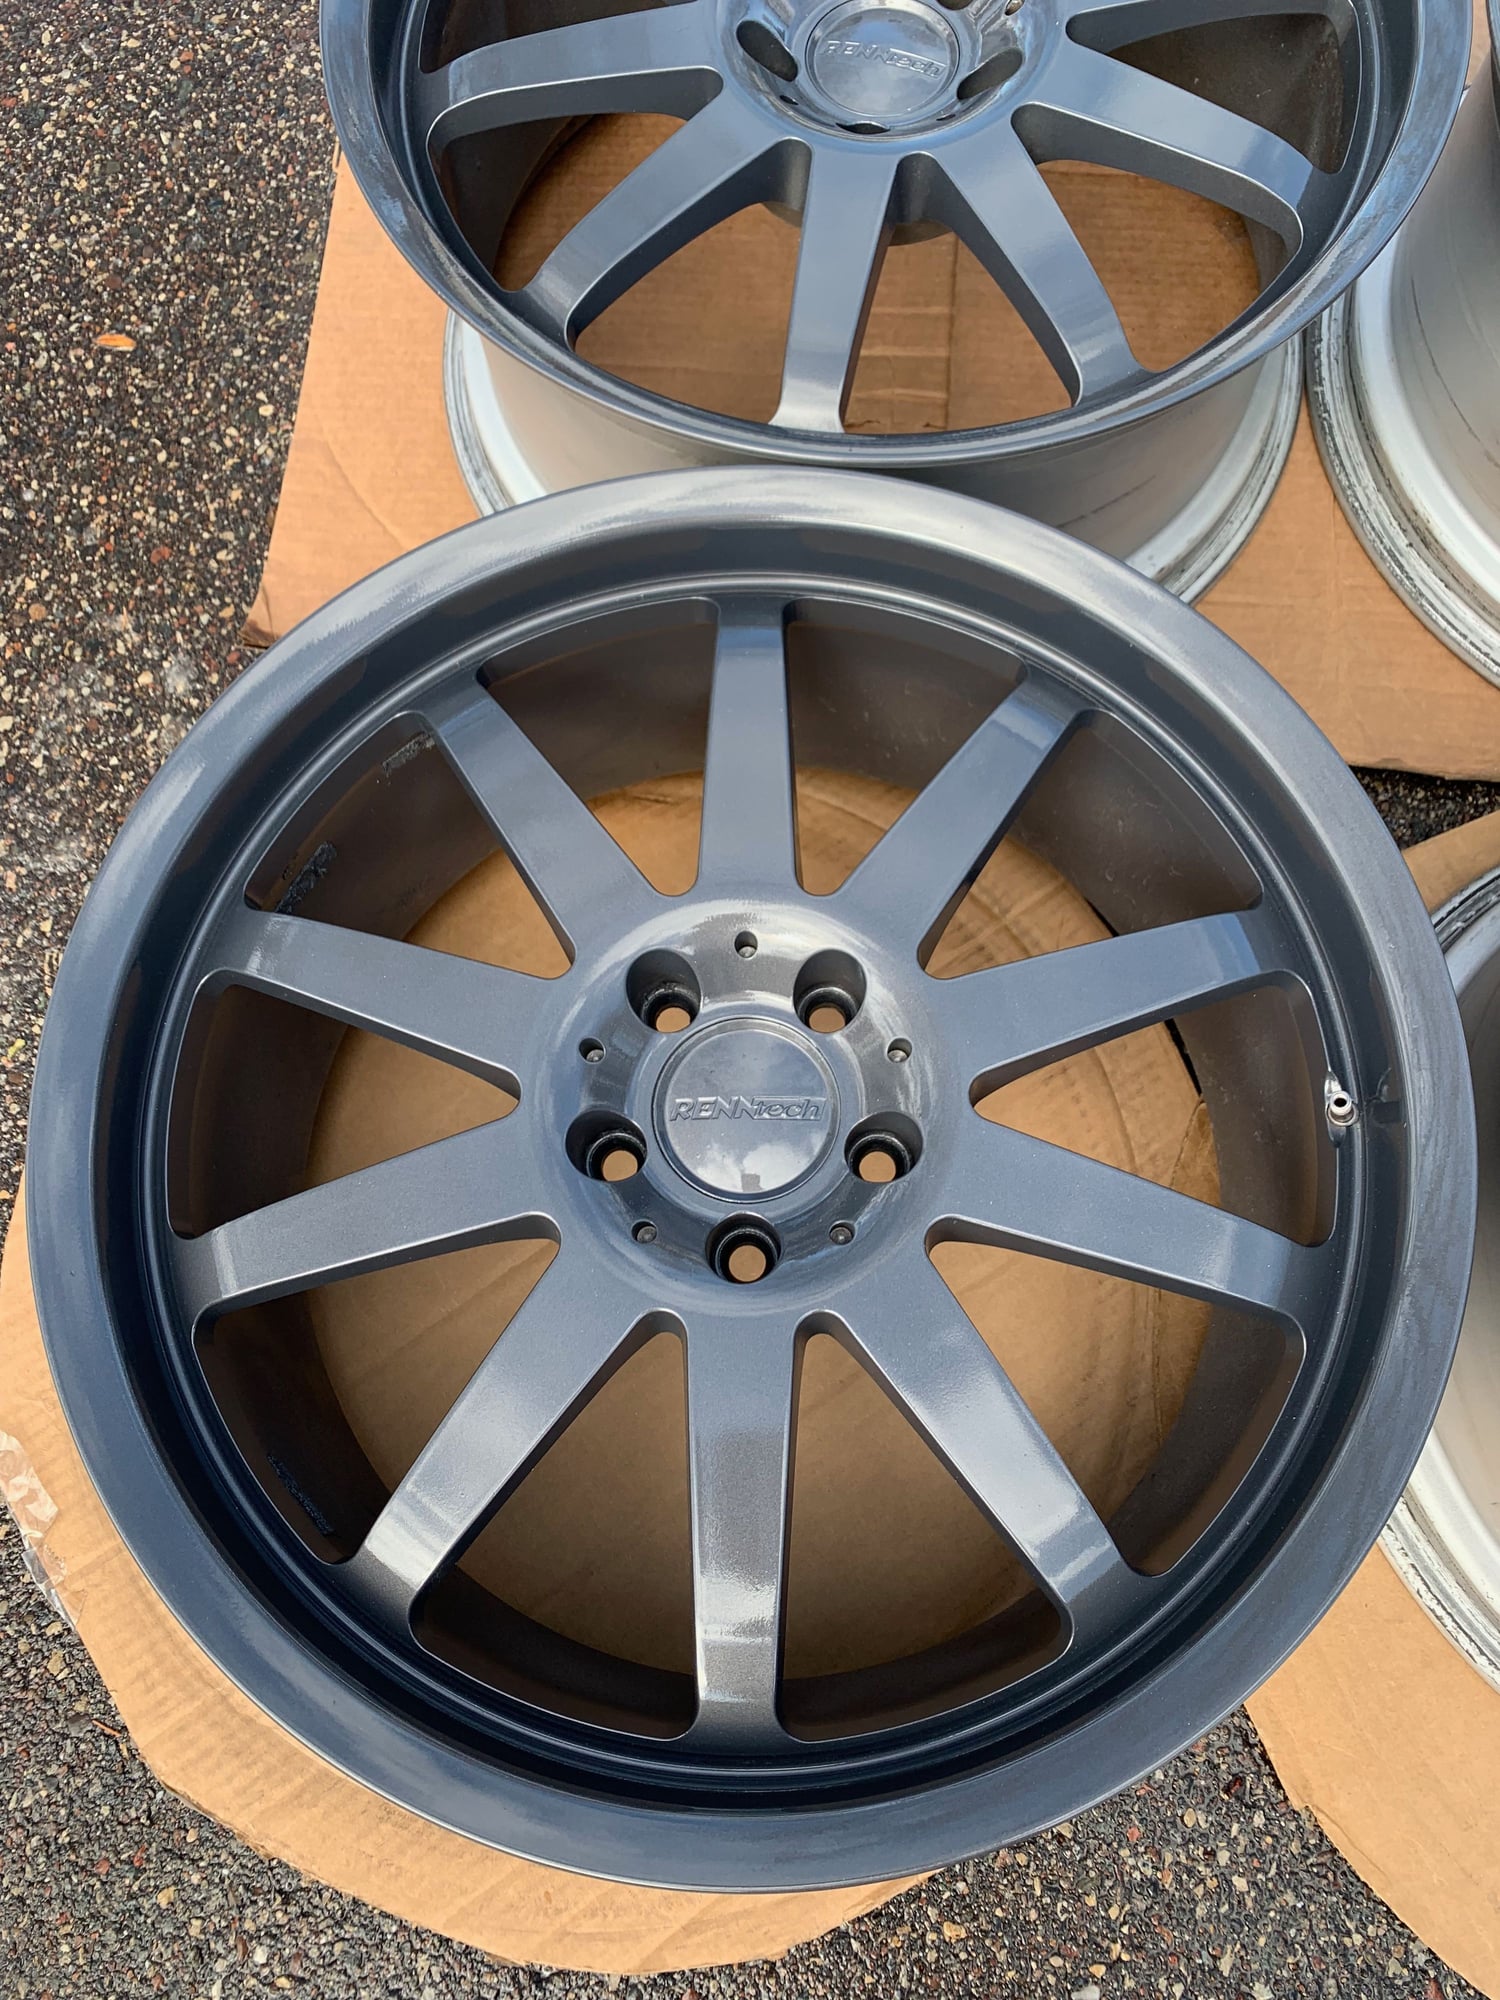 Wheels and Tires/Axles - Rare 19" Renntech Monolite Forged Wheels (1 Piece) - 19x9 +39 - Tesla Gray - Used - 2011 to 2017 Mercedes-Benz ML63 AMG - Minneapolis, MN 55447, United States